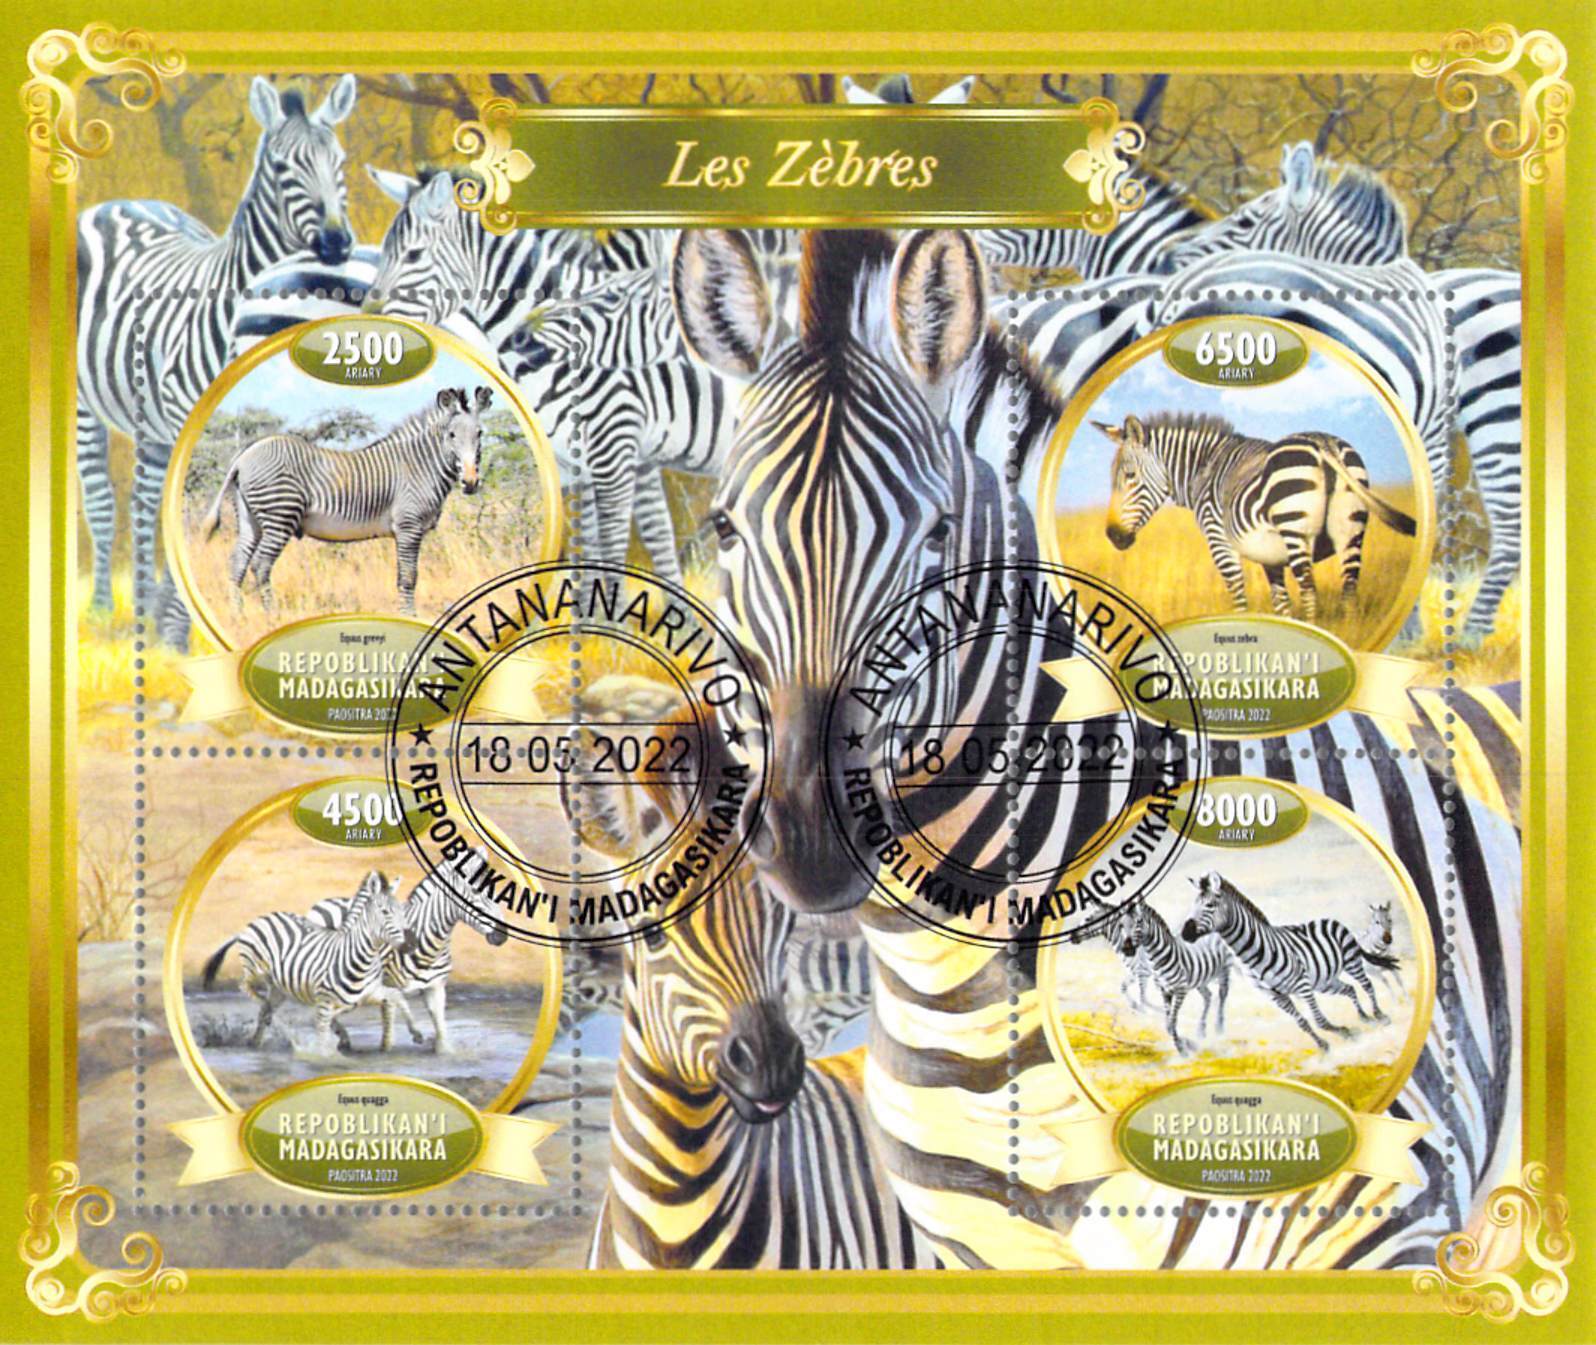 Madagascar 2022 Sheet  Zebras animals 4 vlaues (TS0081)